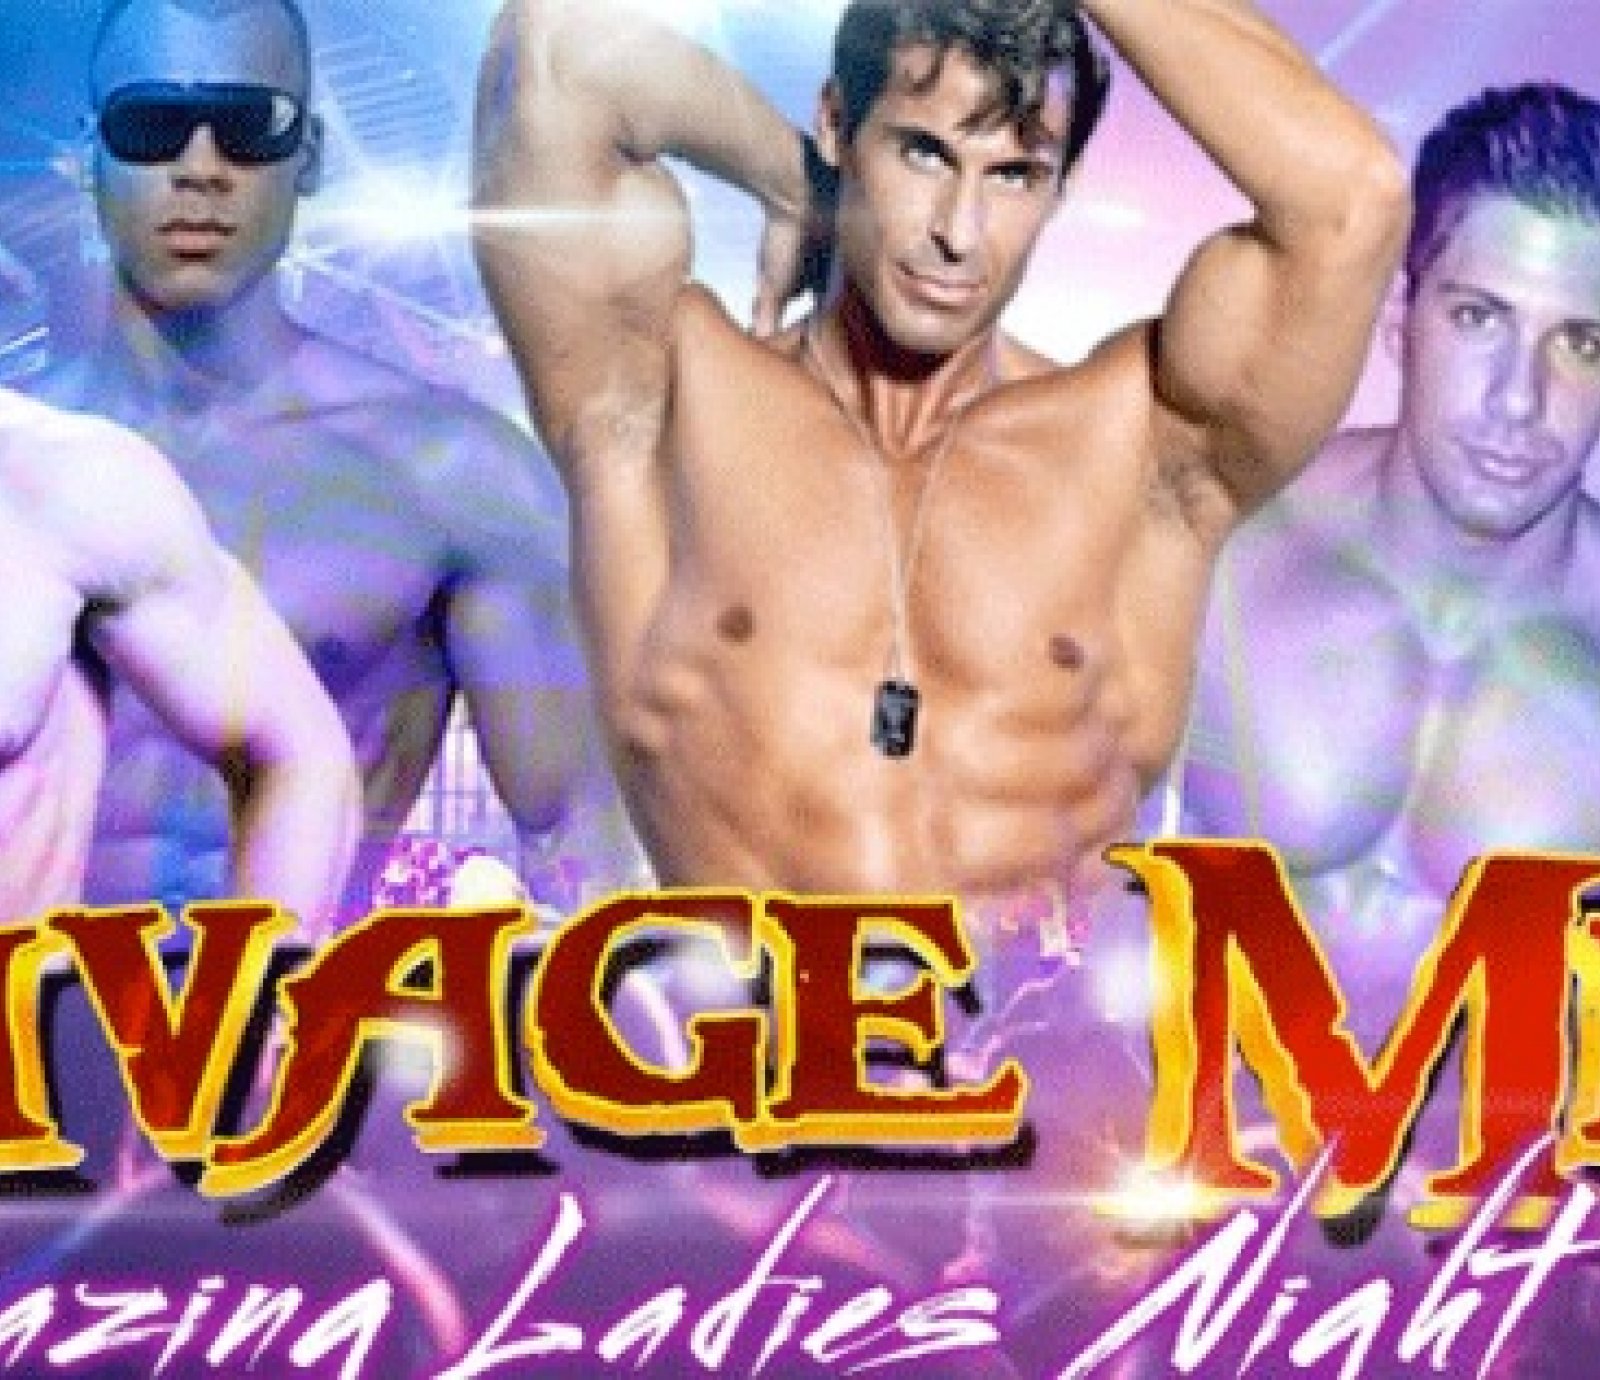 Savage Men Male Revue - Seattle